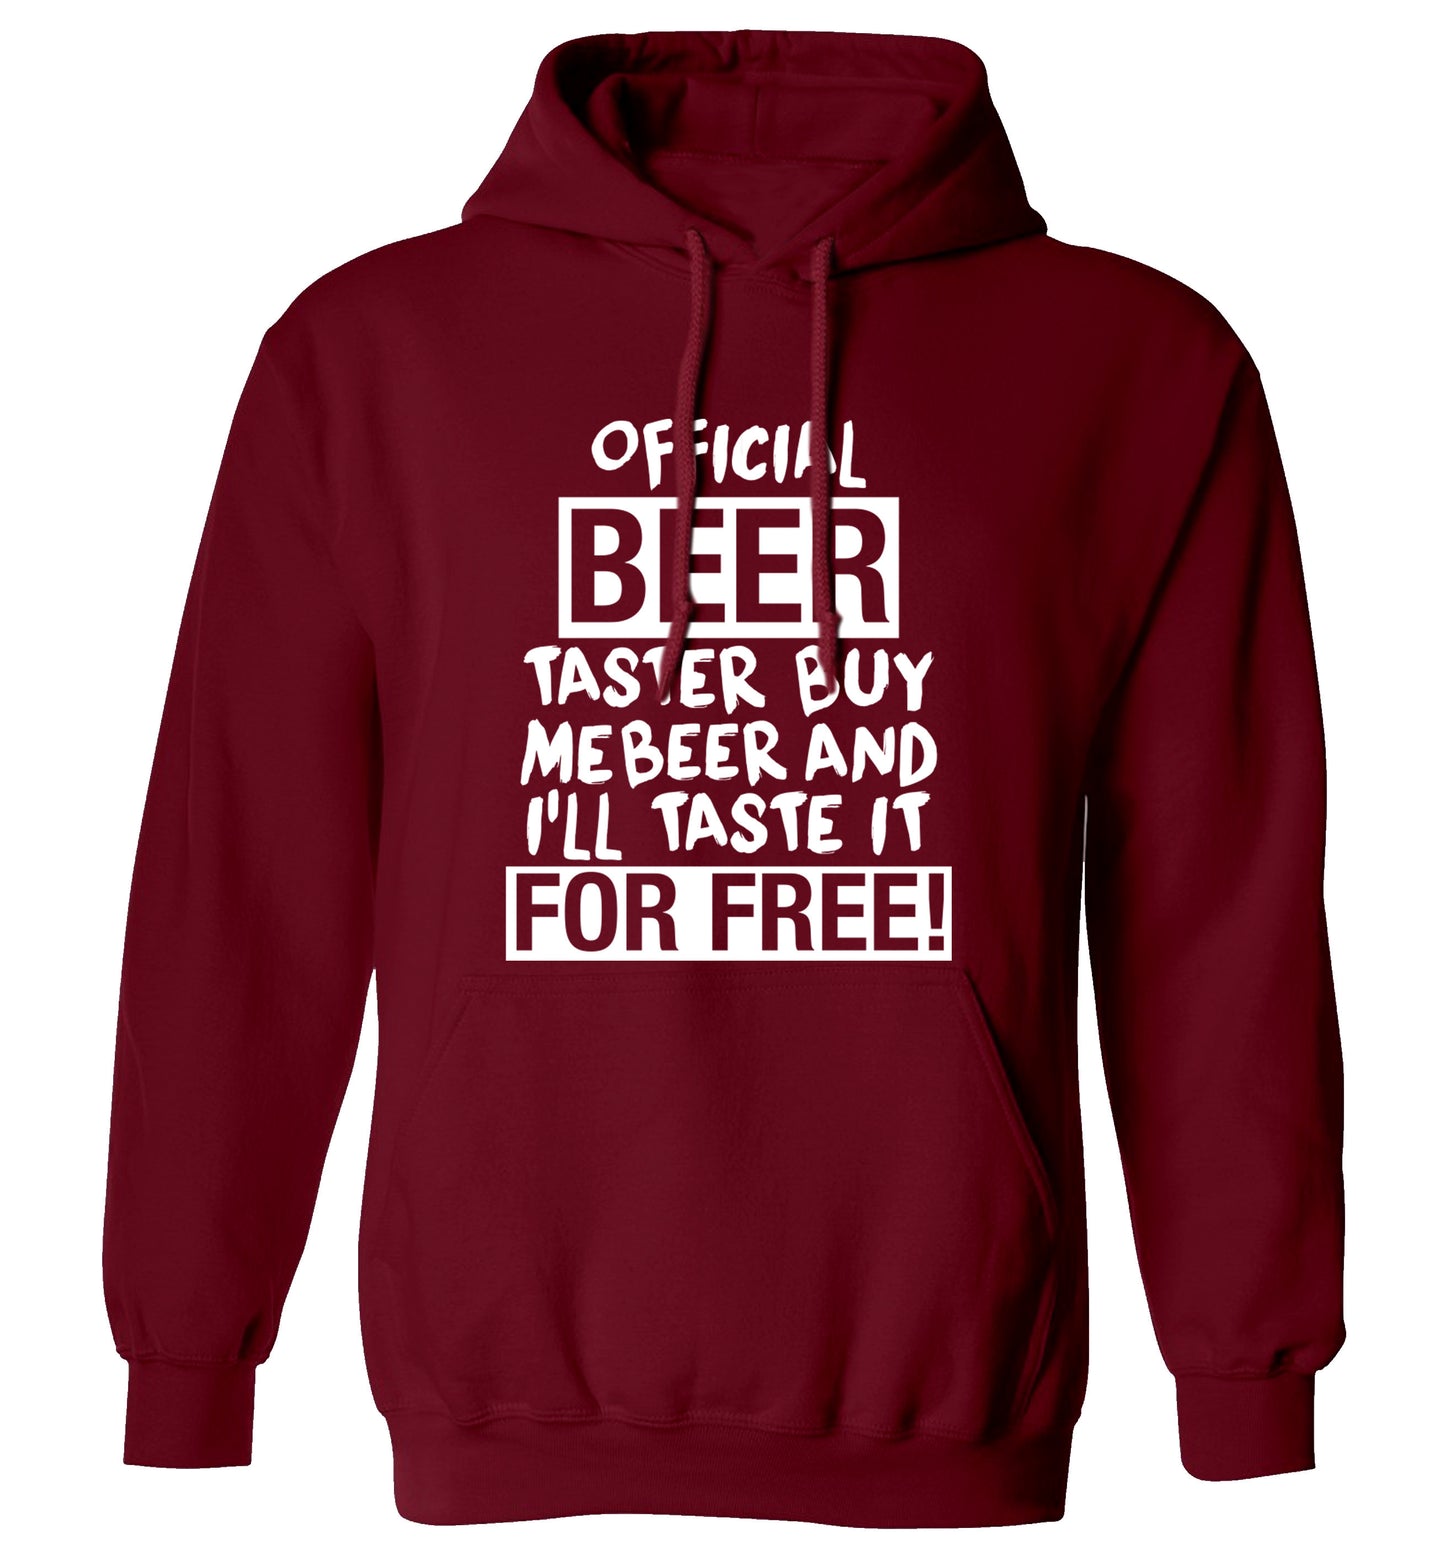 Official beer taster buy me beer and I'll taste it for free! adults unisex maroon hoodie 2XL